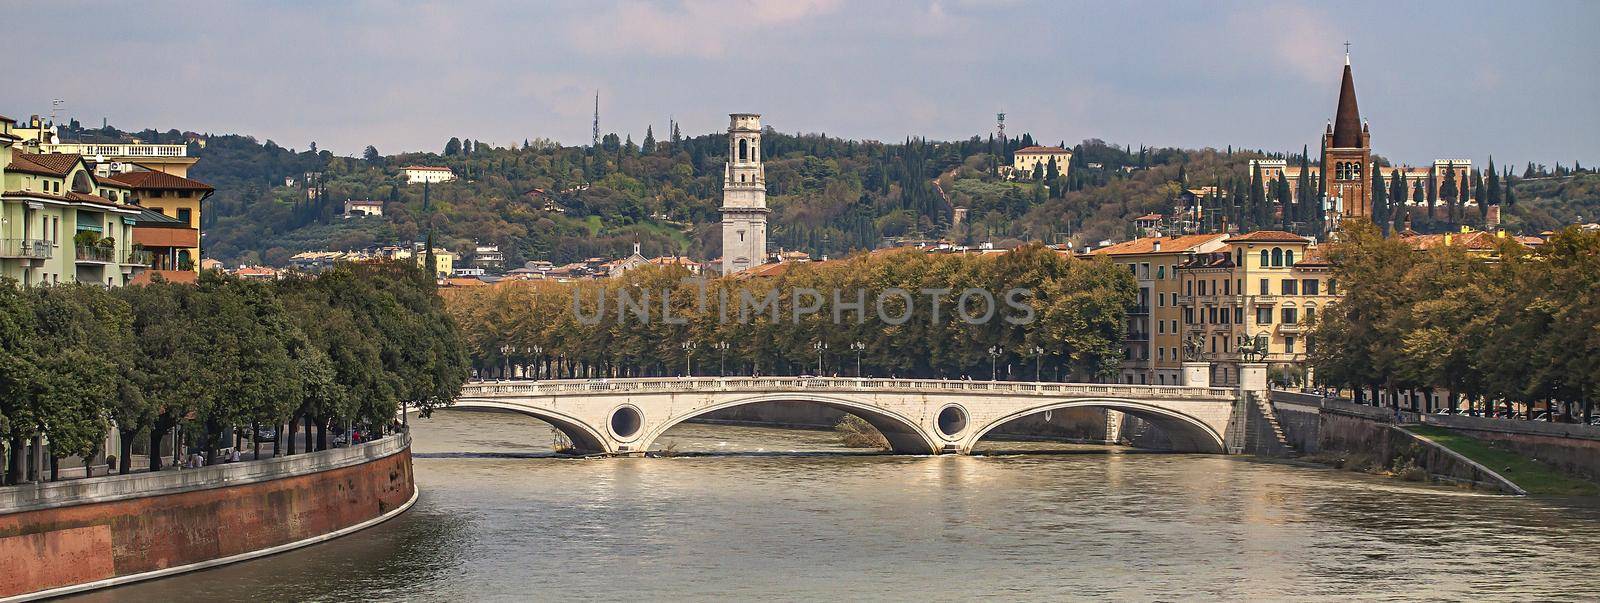 Verona river bridge by pippocarlot